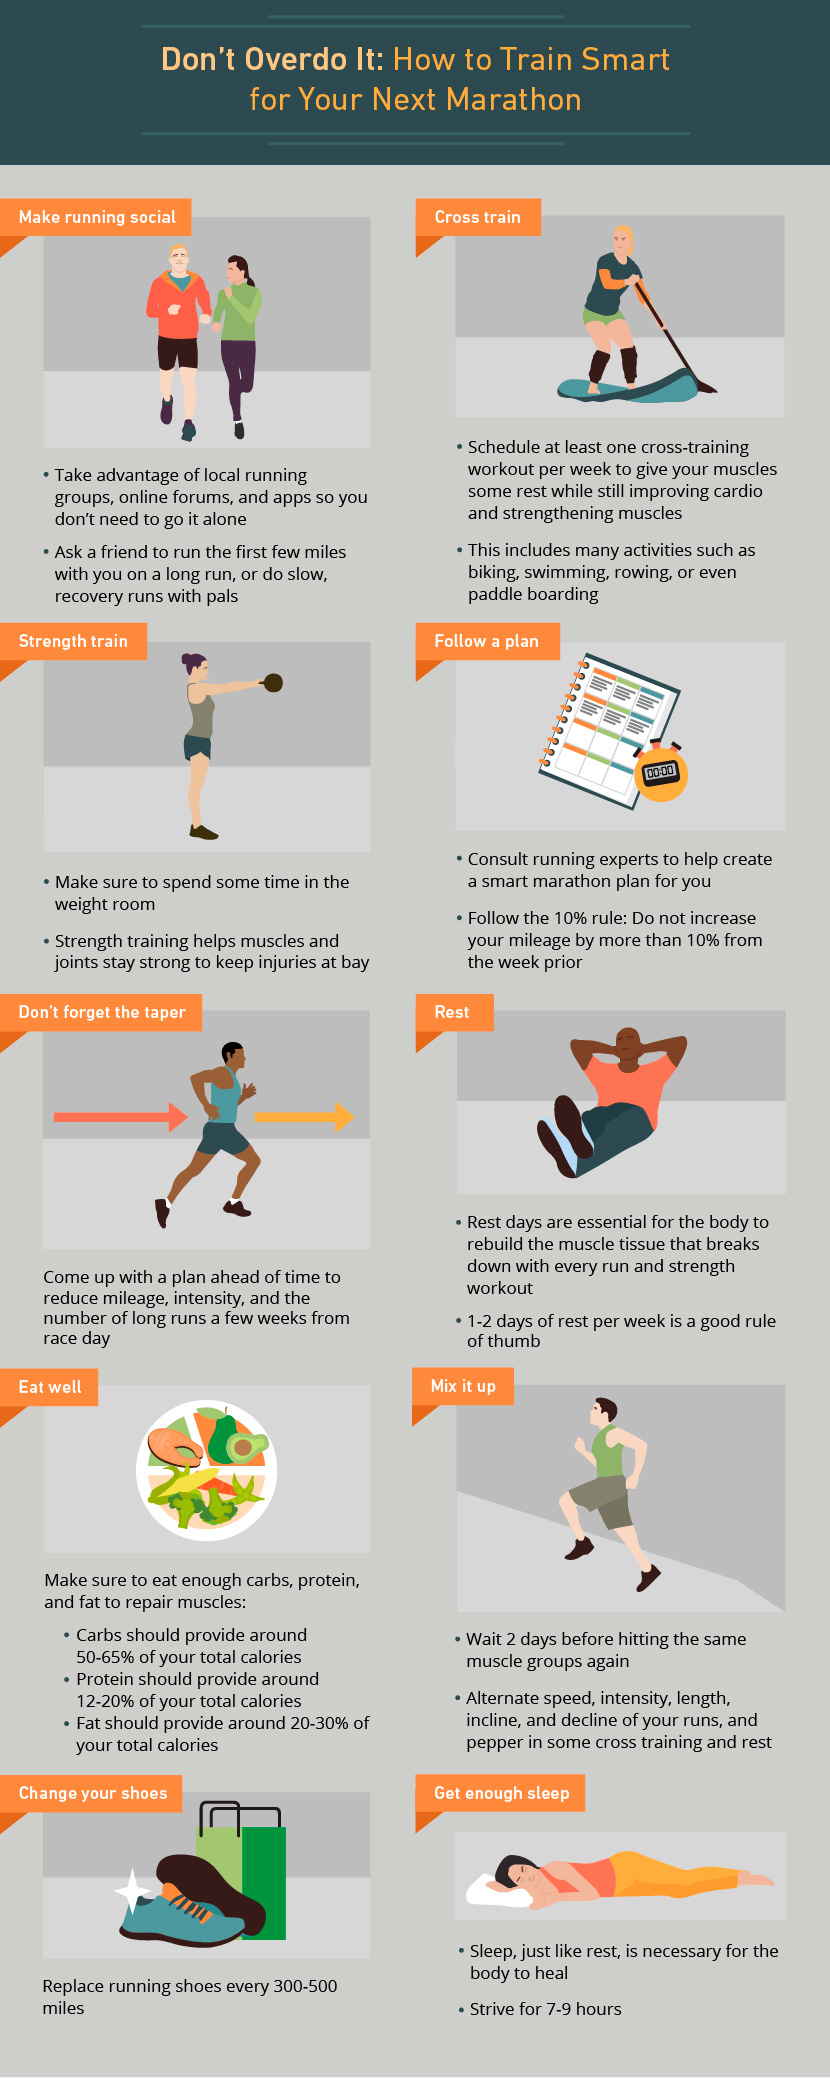 9 Important Marathon Training Tips for New Runners.